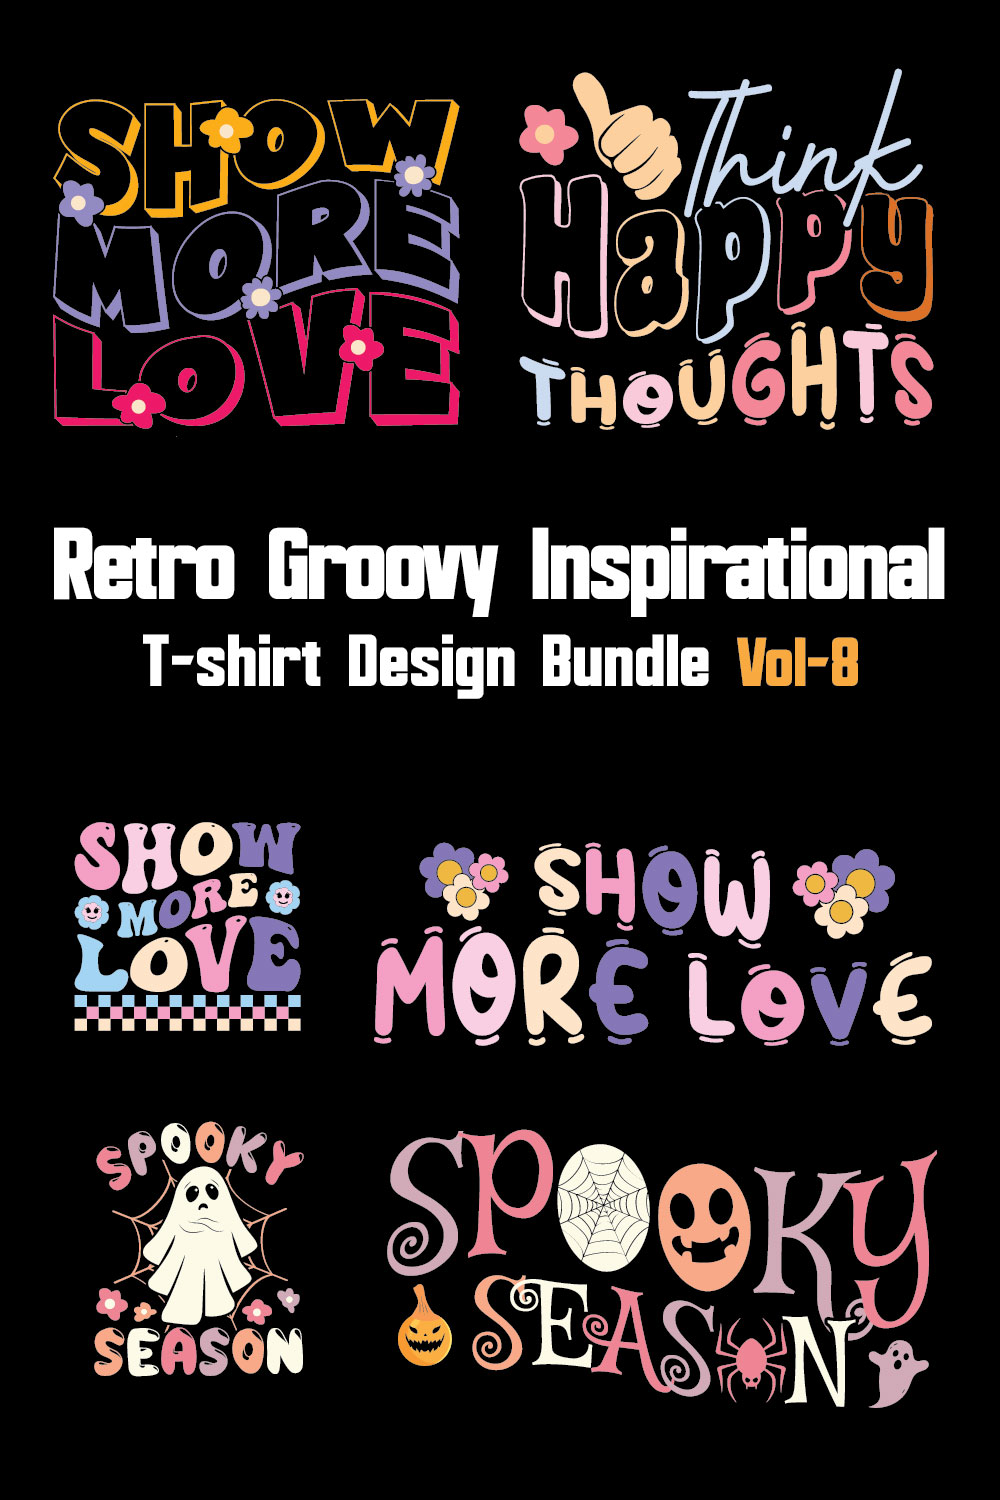 Retro Groovy Inspirational T-shirt Design Bundle Vol-8 pinterest preview image.